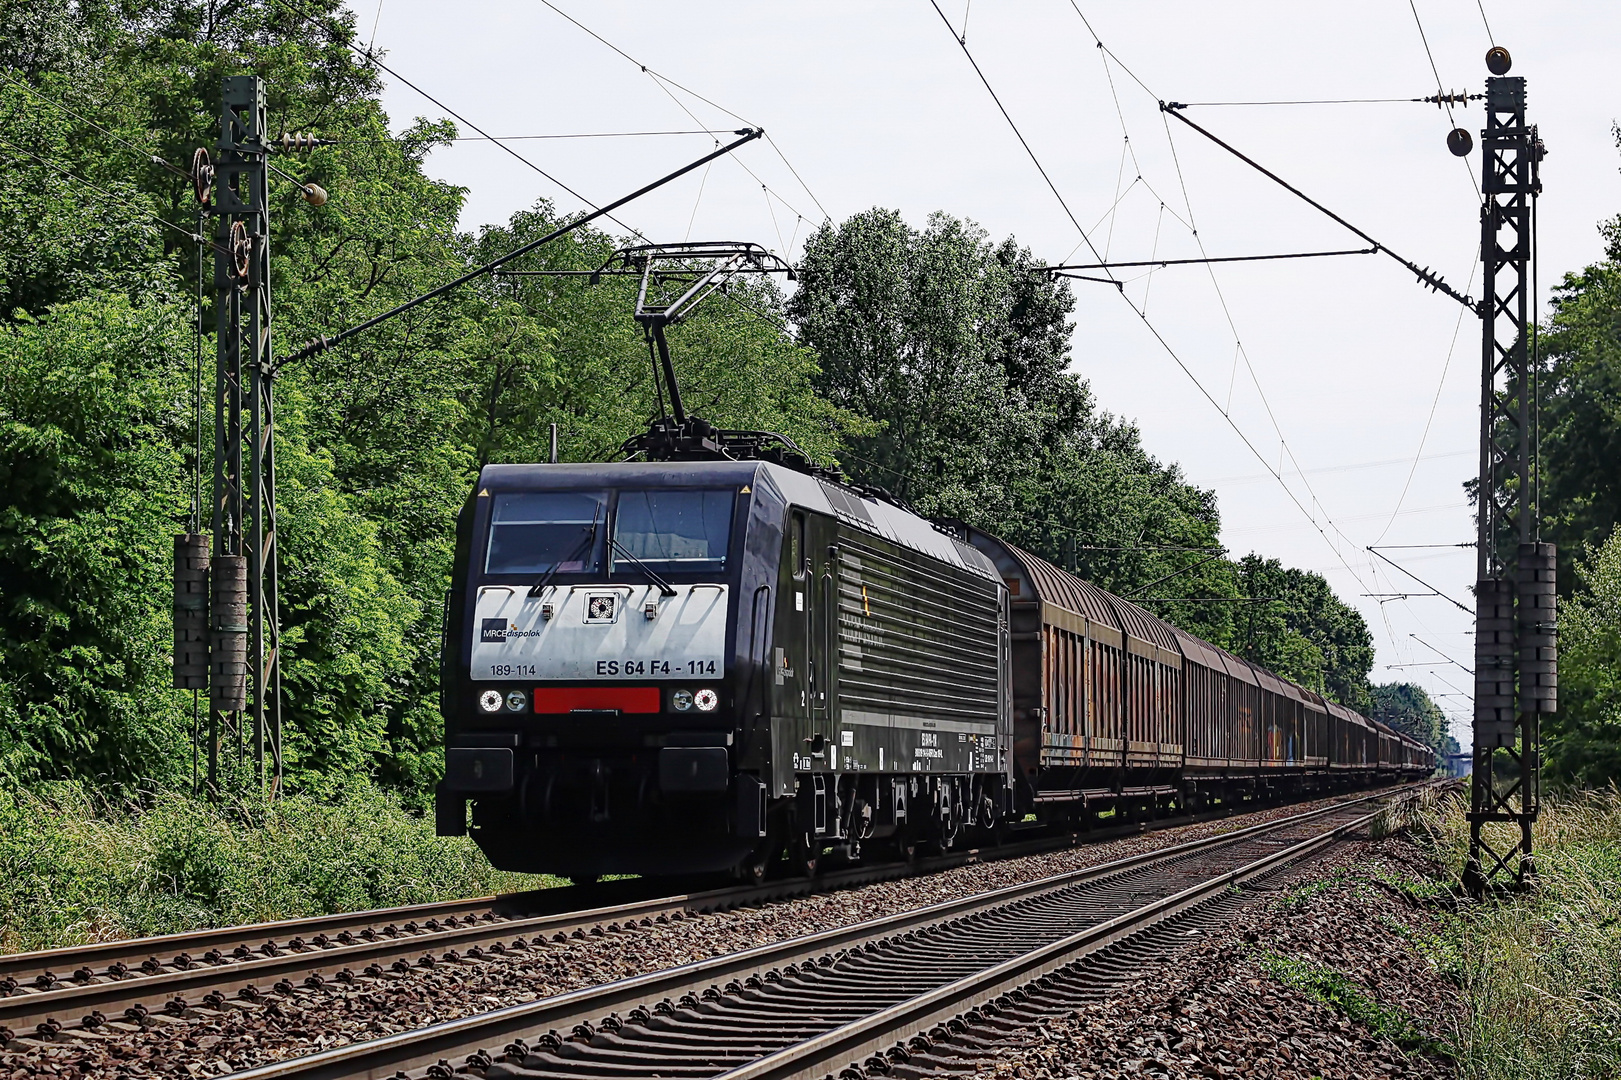 189 114 ES 64 F4-114 MRCE dispolok vor einem gem. Güterzug